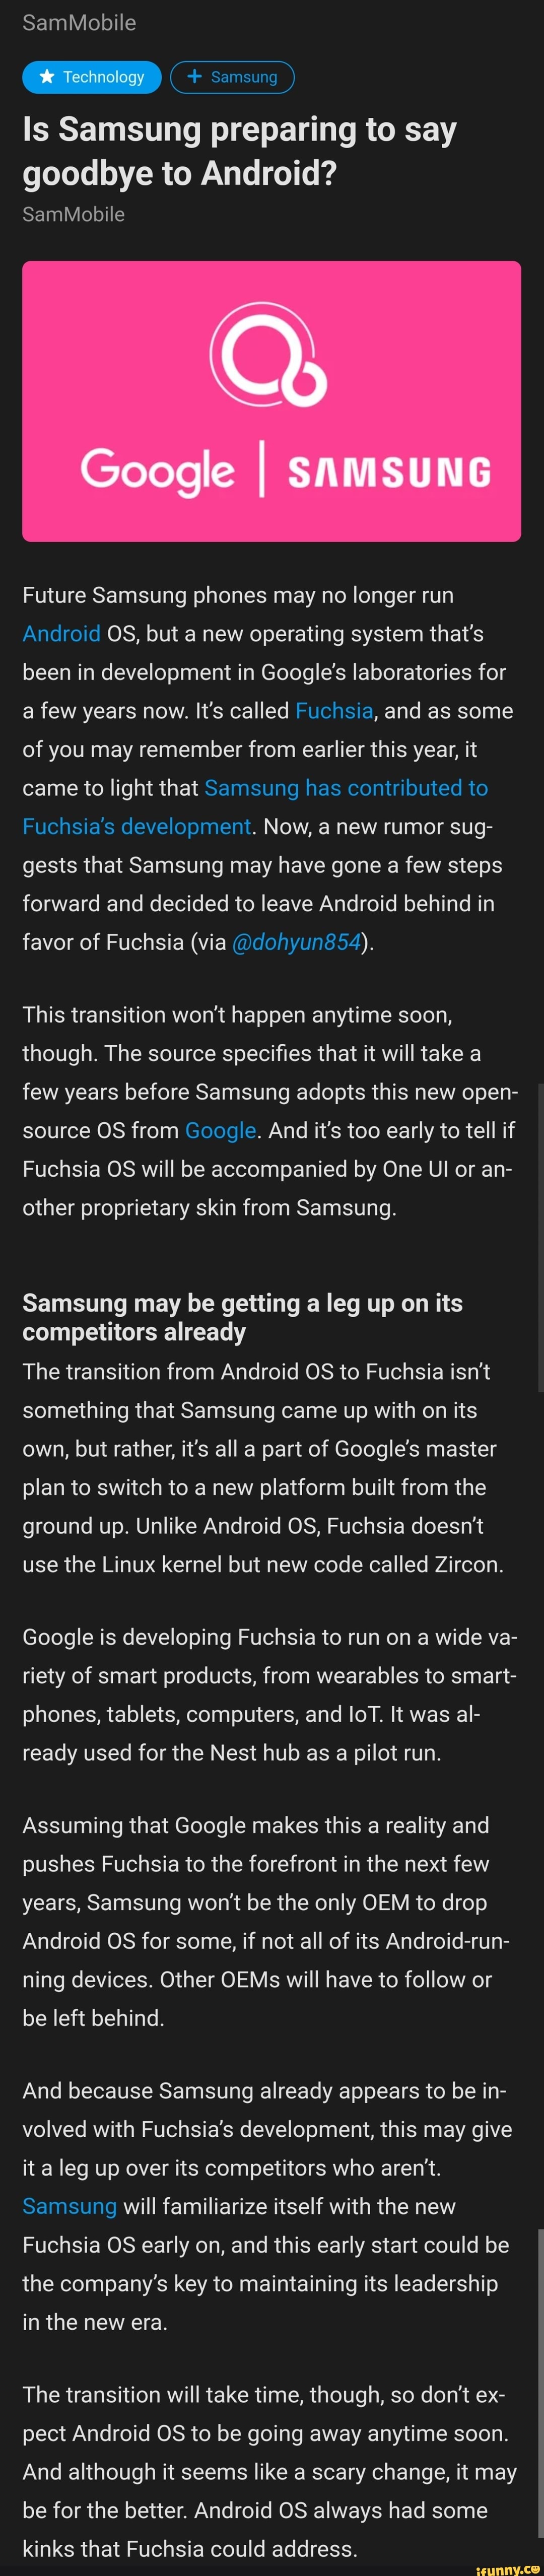 SamMobile GED Is Samsung preparing to say goodbye to Android? SamMobile  Google I SAMSUNG Future Samsung